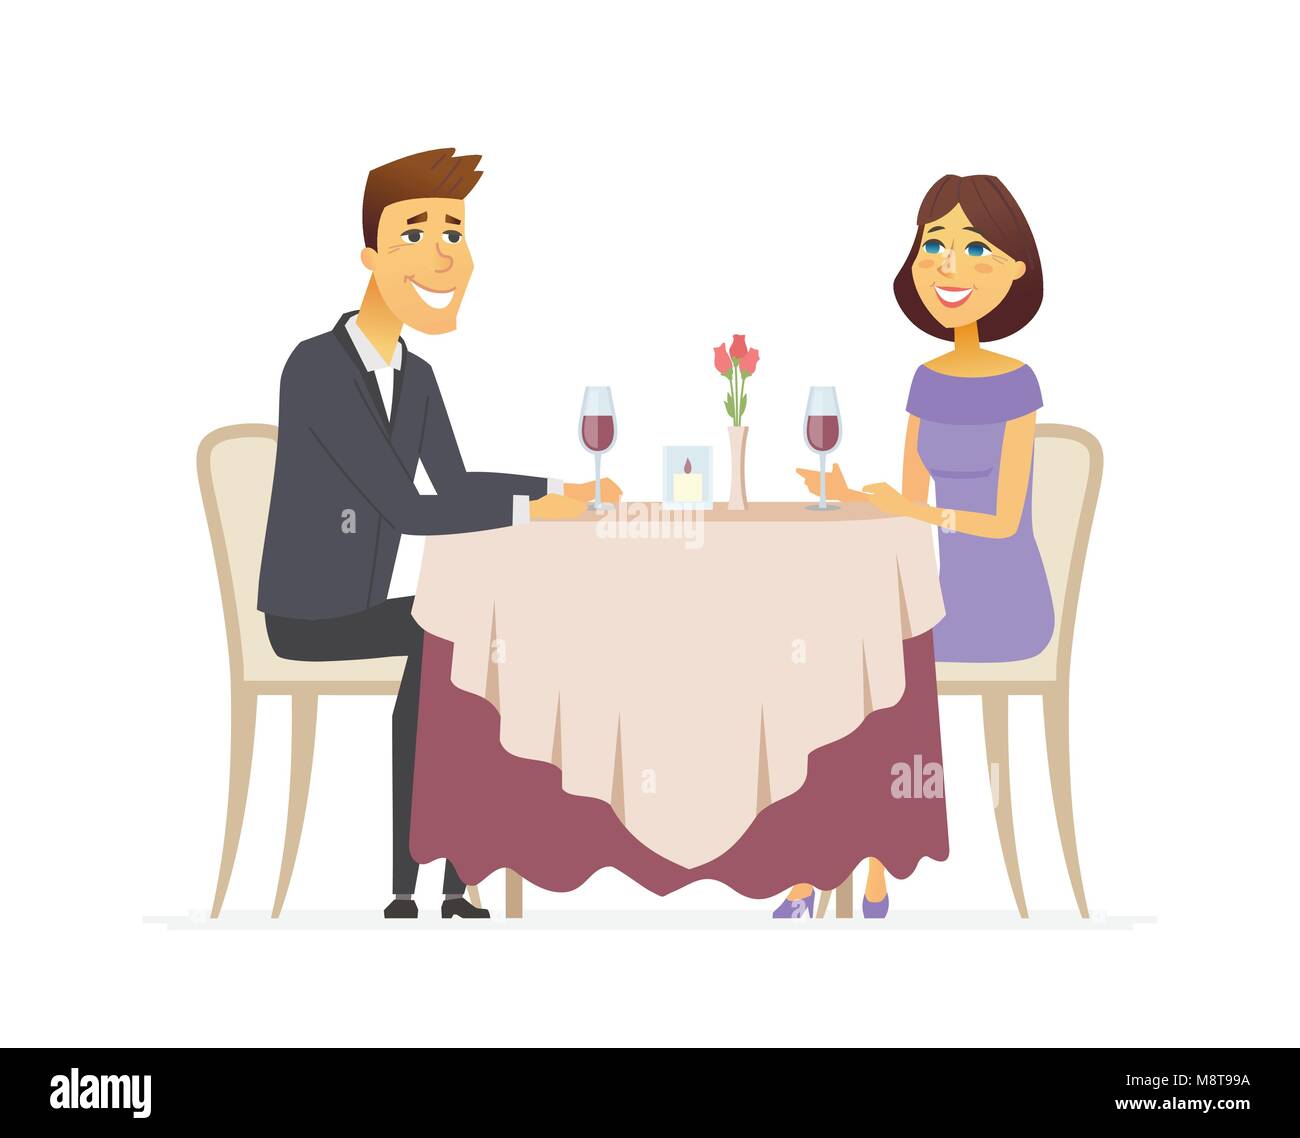 Romantisches Abendessen - cartoon Menschen Charakter isoliert Abbildung Stock Vektor